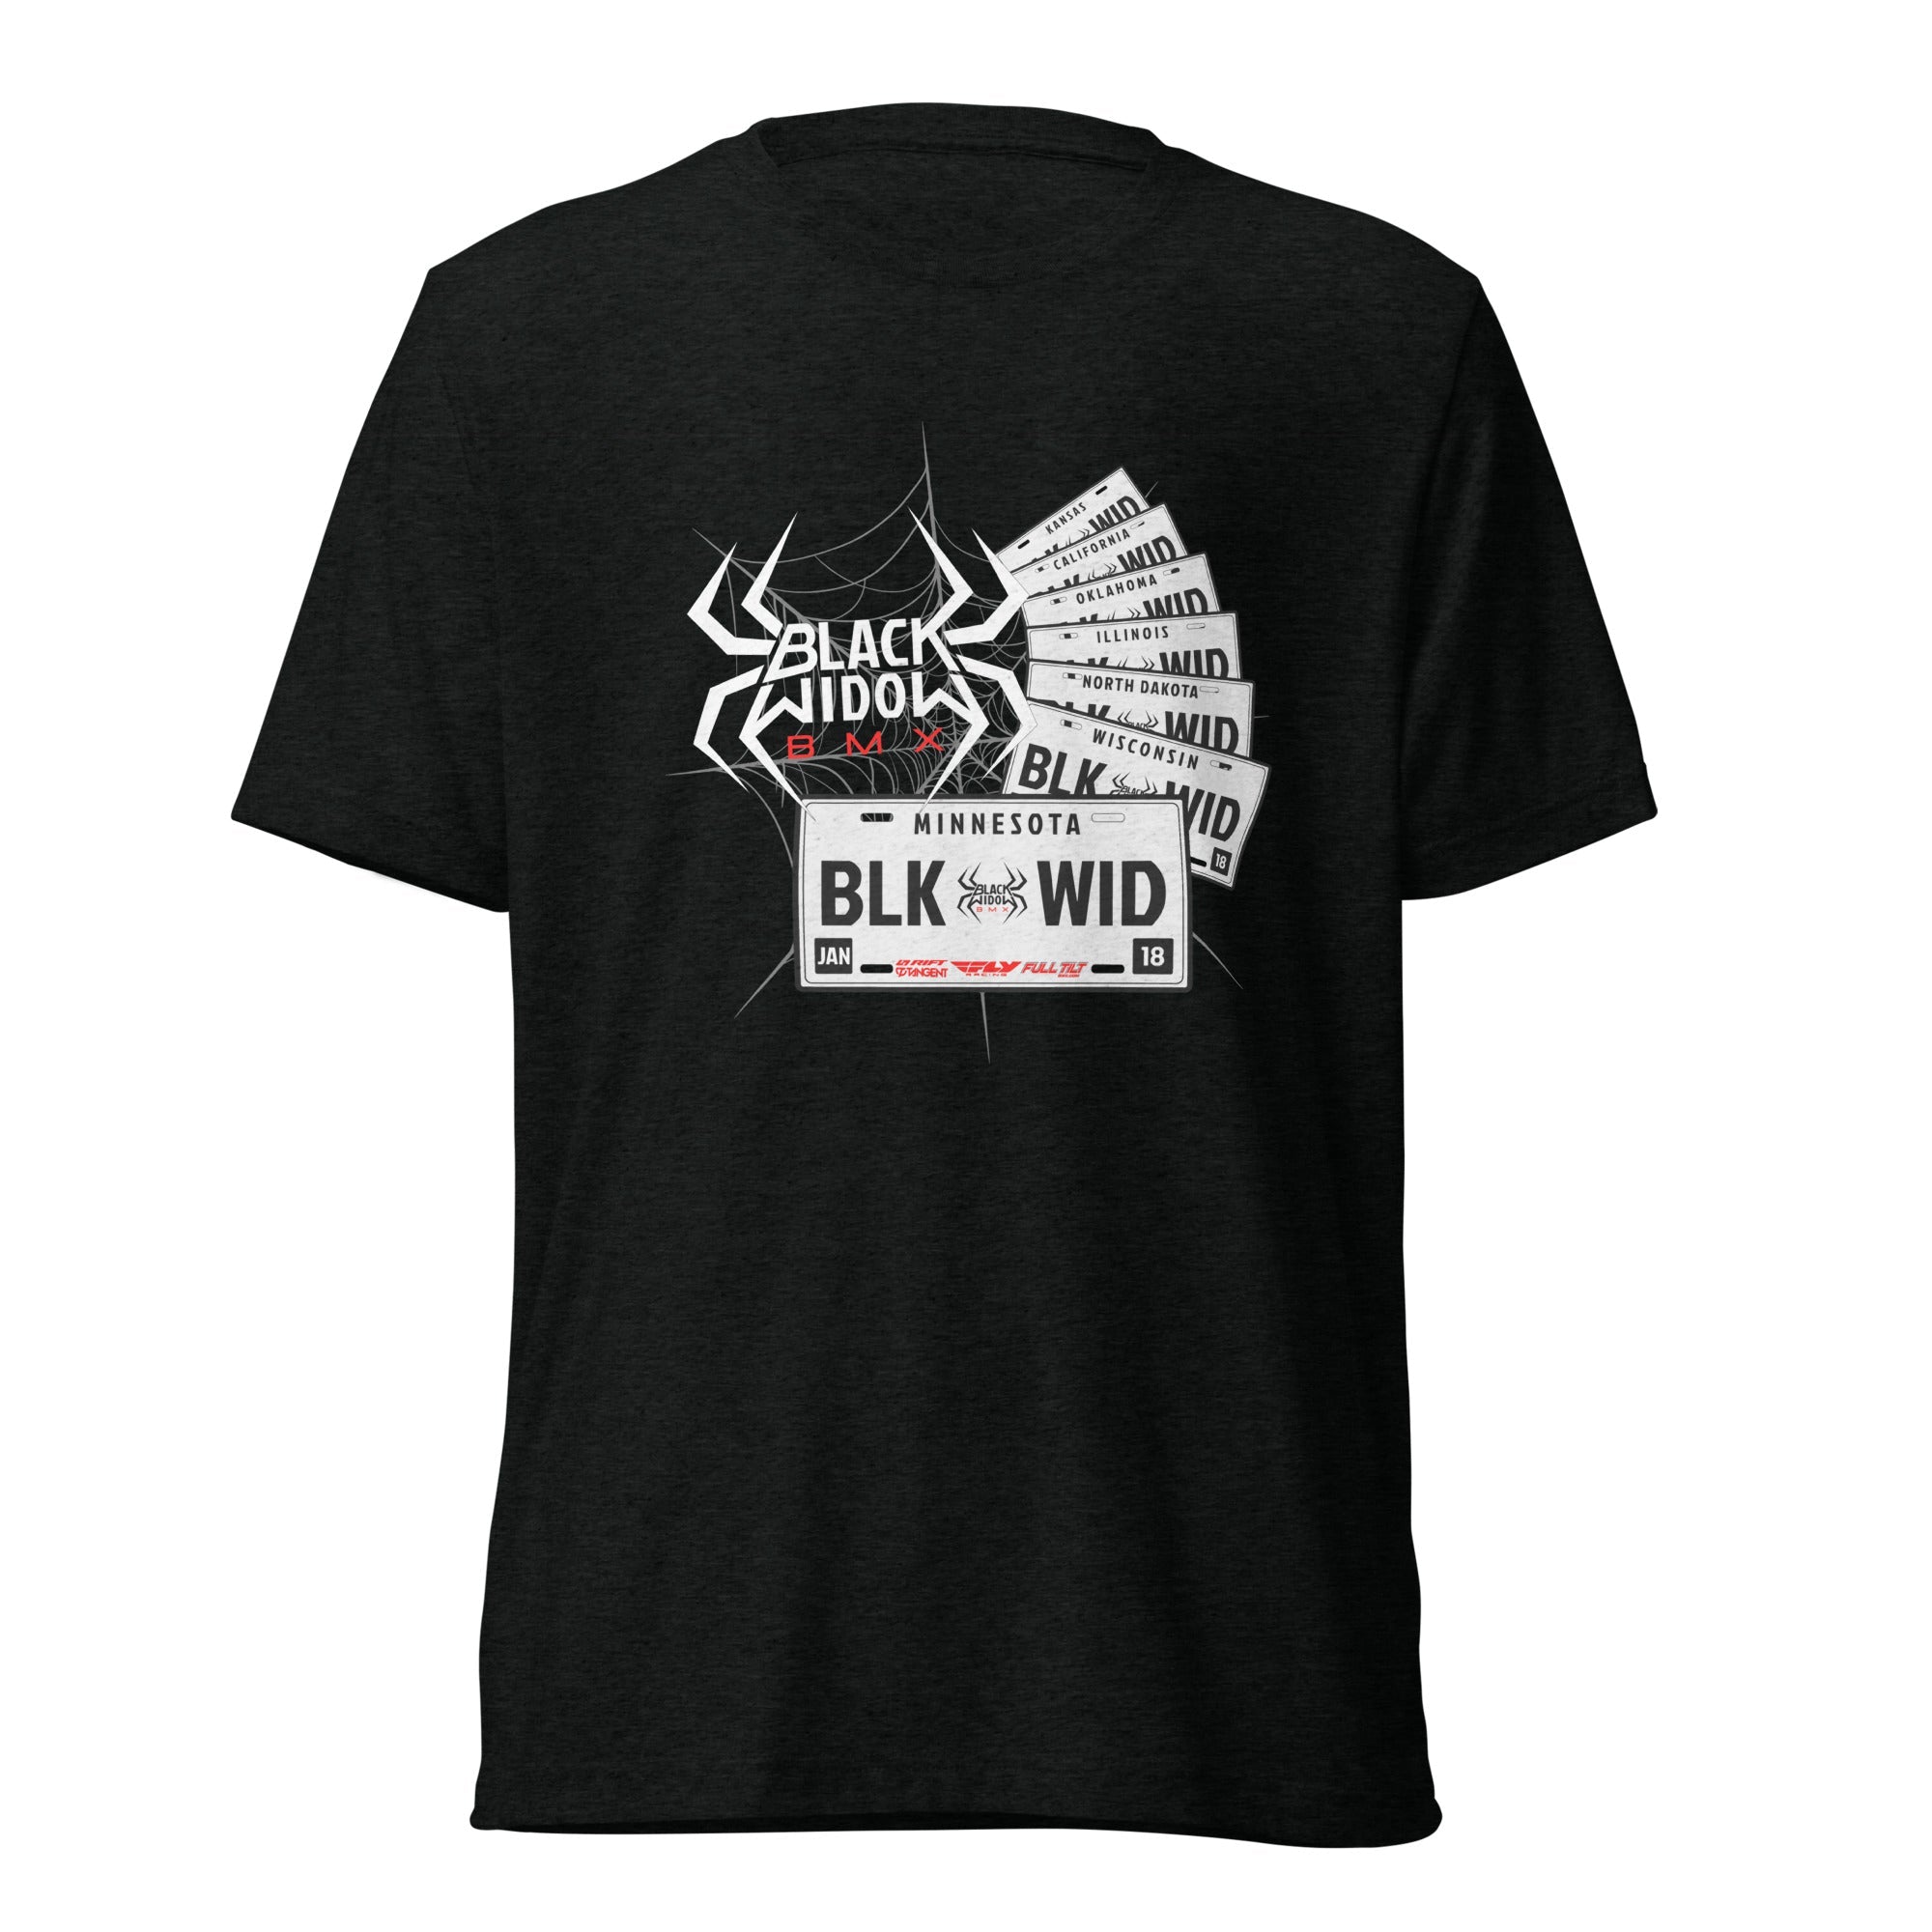 BW Short sleeve t-shirt (Plates)